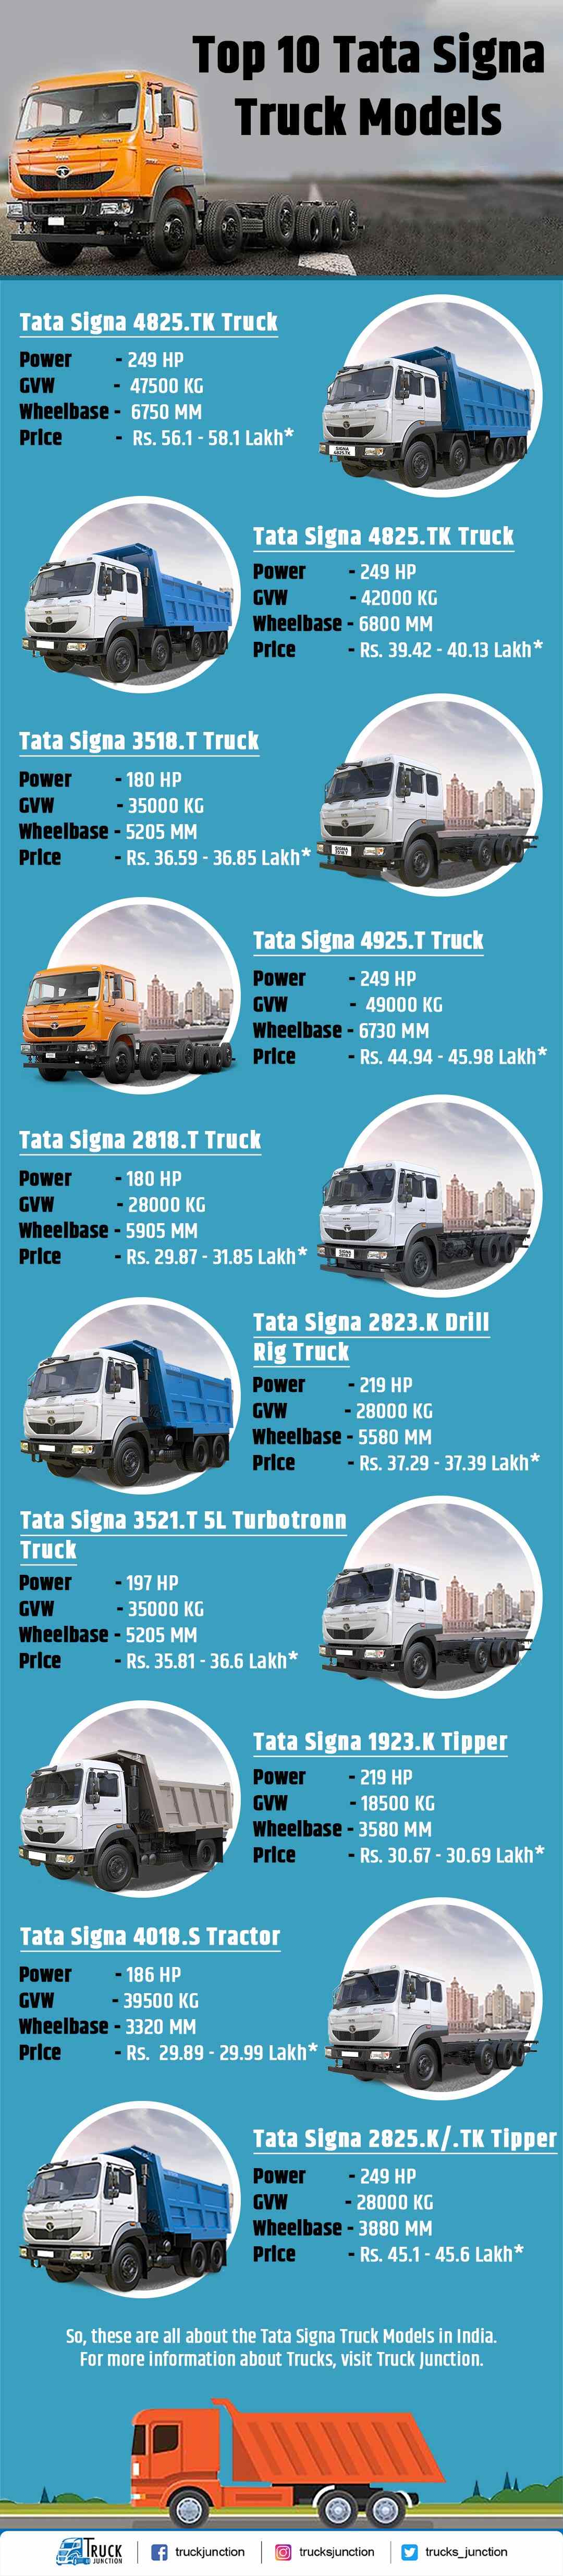 Top 10 TATA Signa Truck Model Infographic